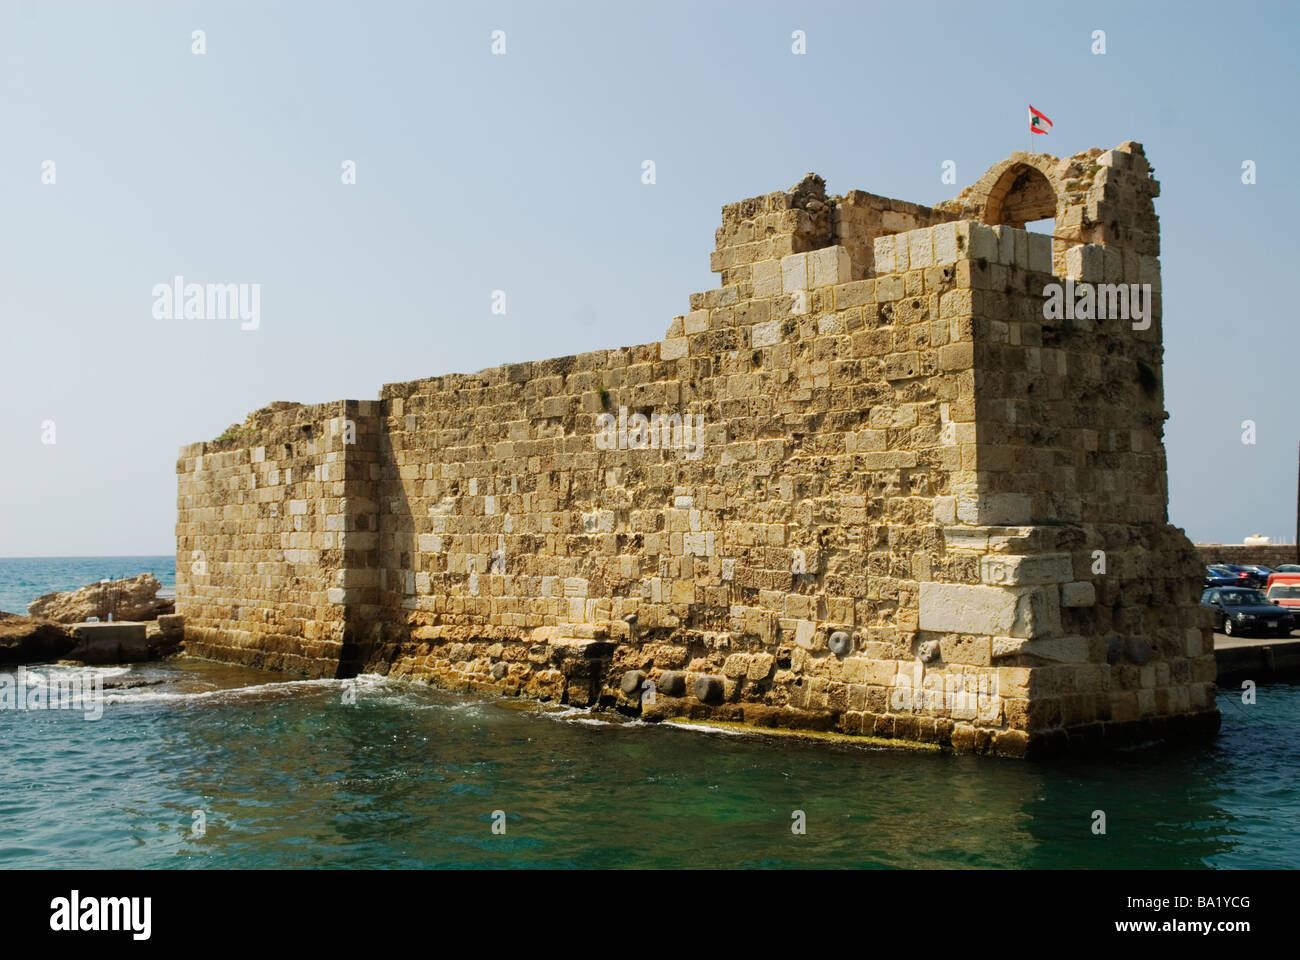 Zitadelle von Byblos Libanon Nahost Asien Stockfoto